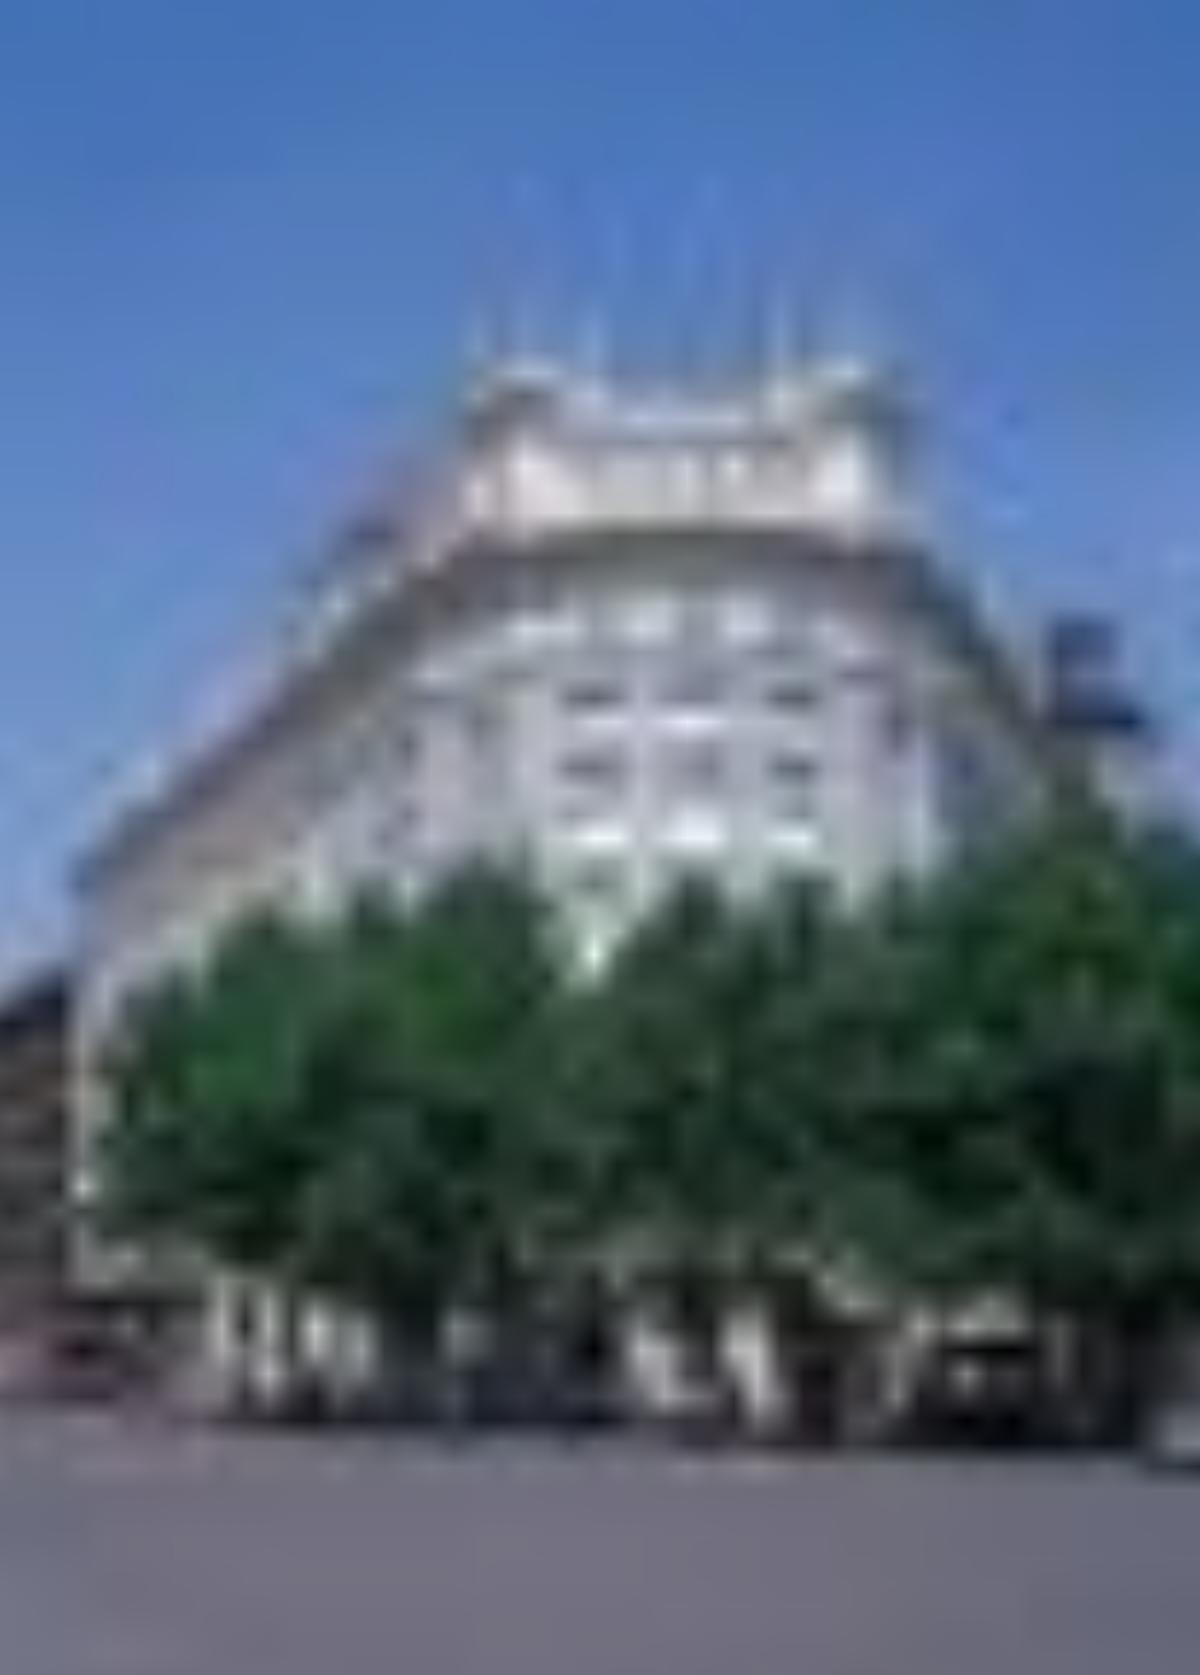 NH Madrid Nacional Hotel Madrid Spain